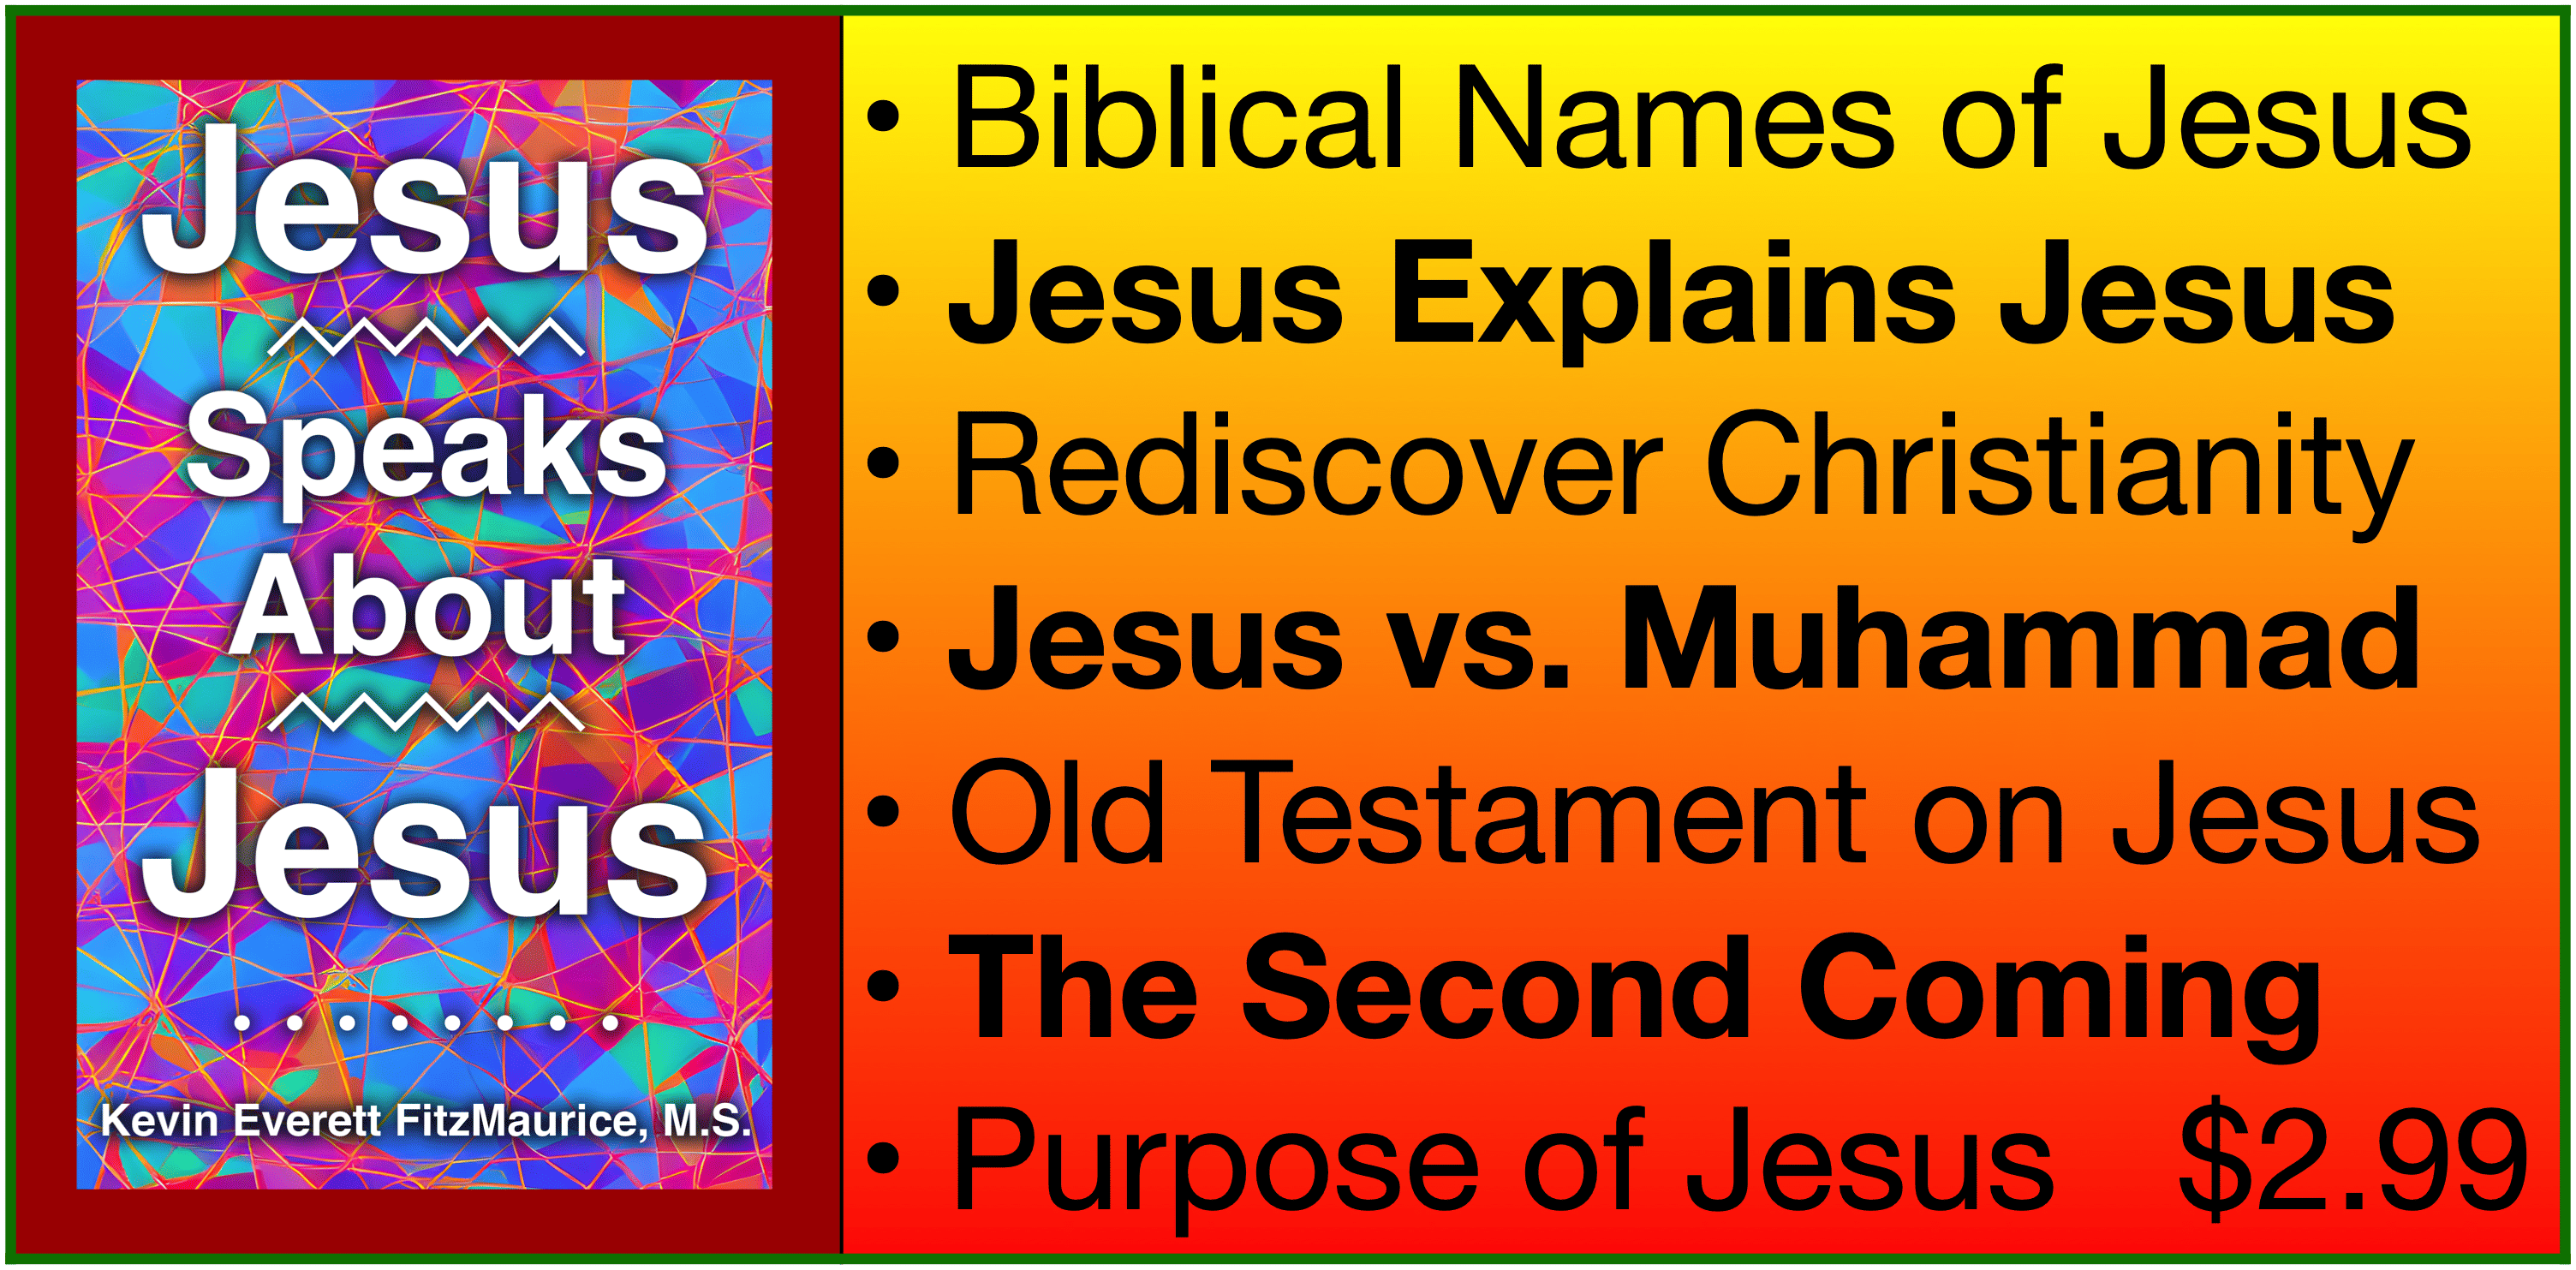 Jesus Speaks About Jesus book information.